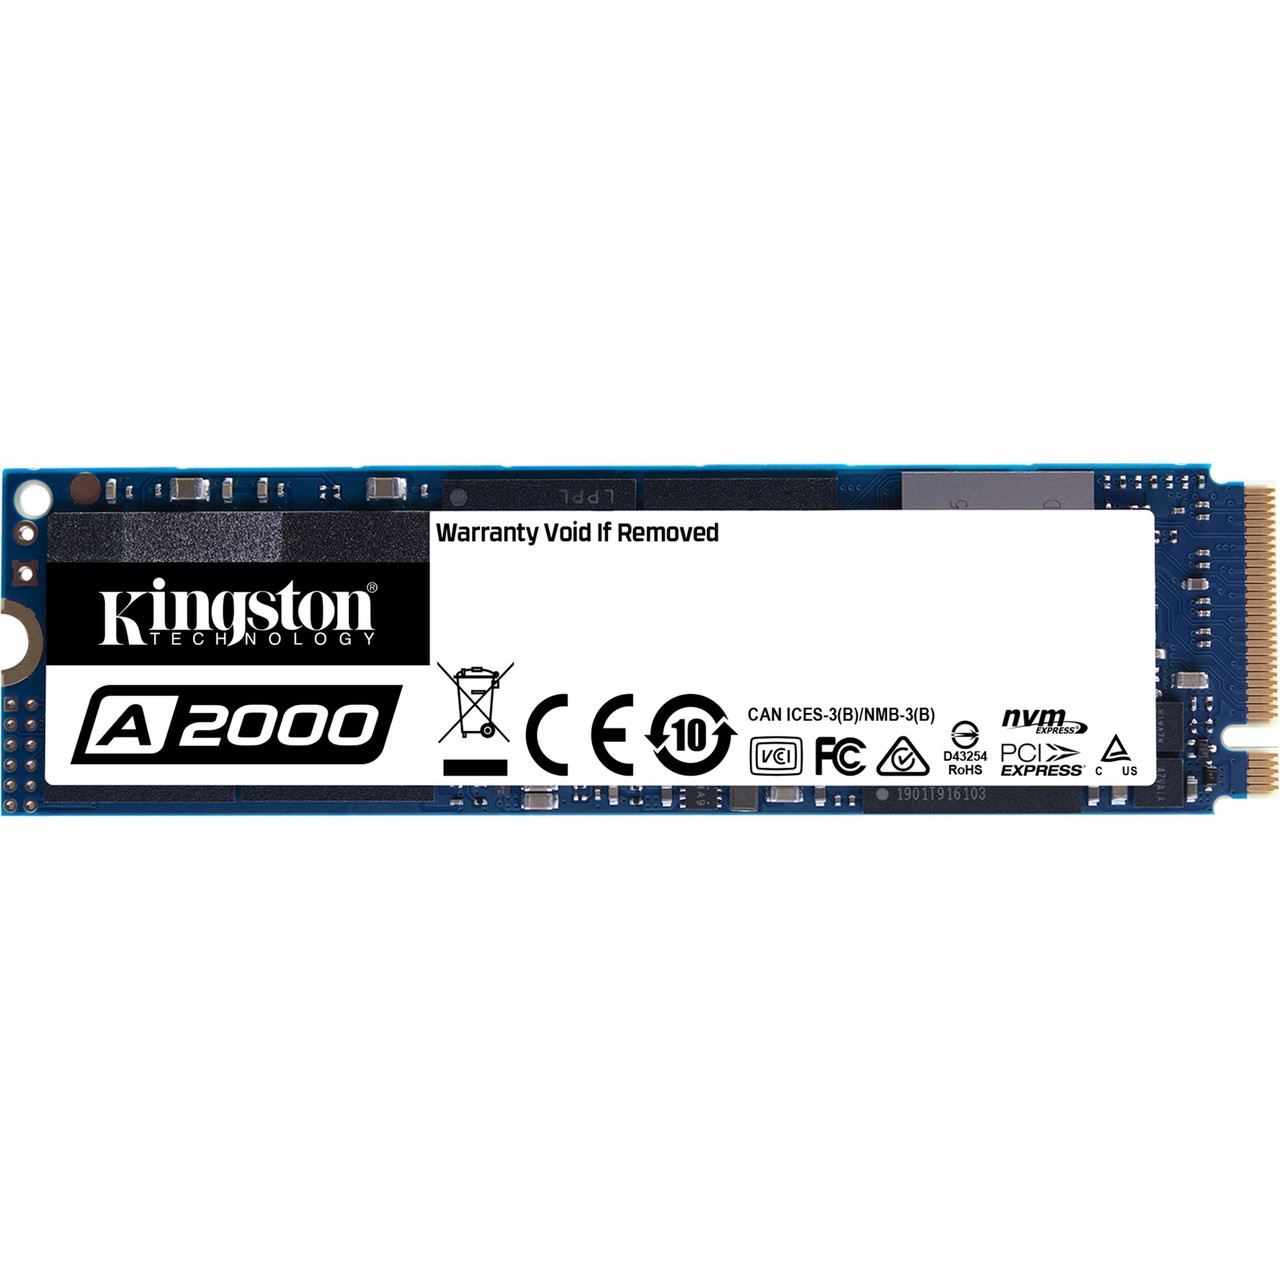 KINGSTON A2000 500 GB Solid State Drive - M.2 2280 Internal